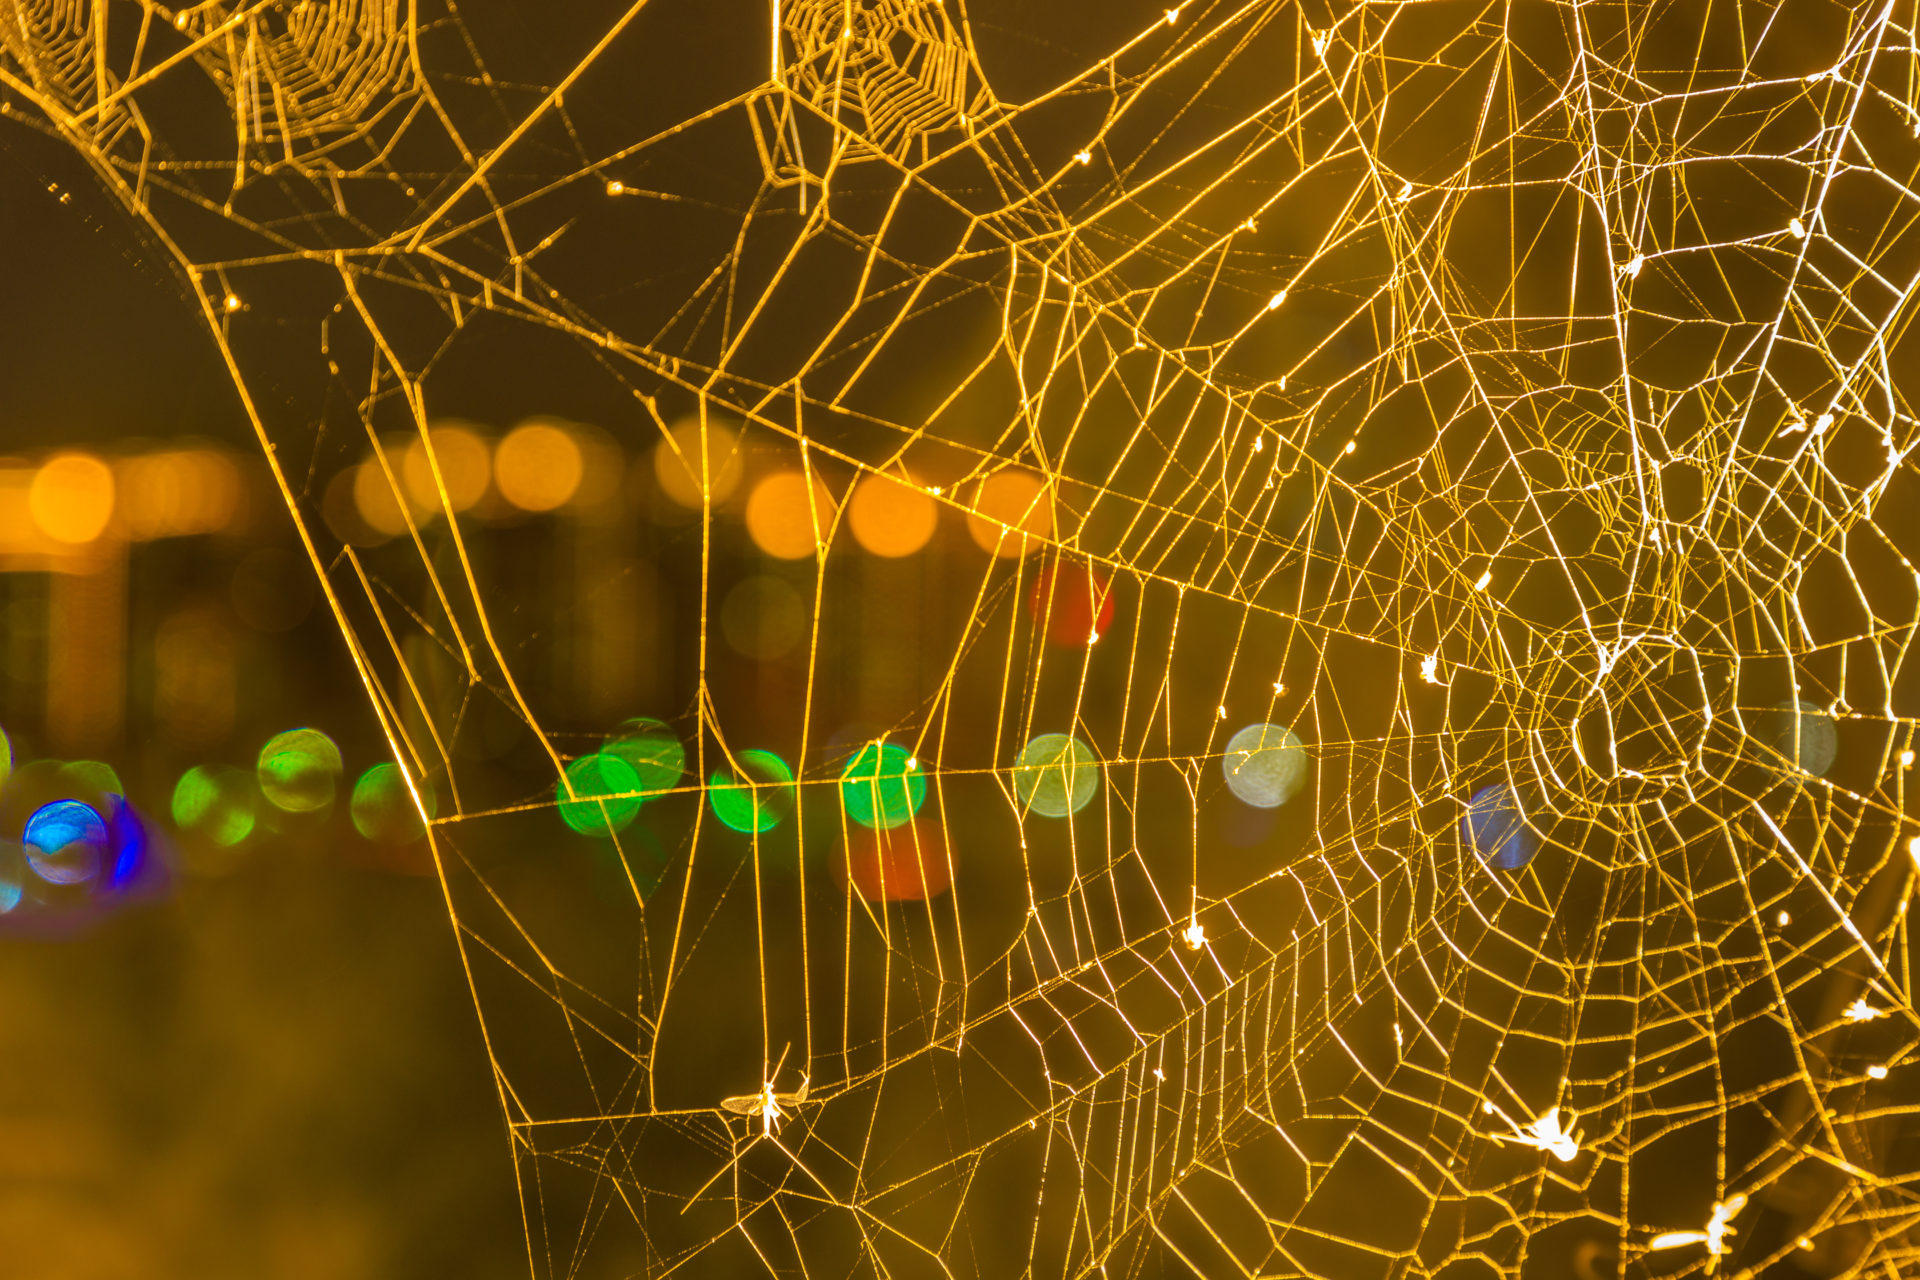 Get Ready for a Cobweb Free Halloween